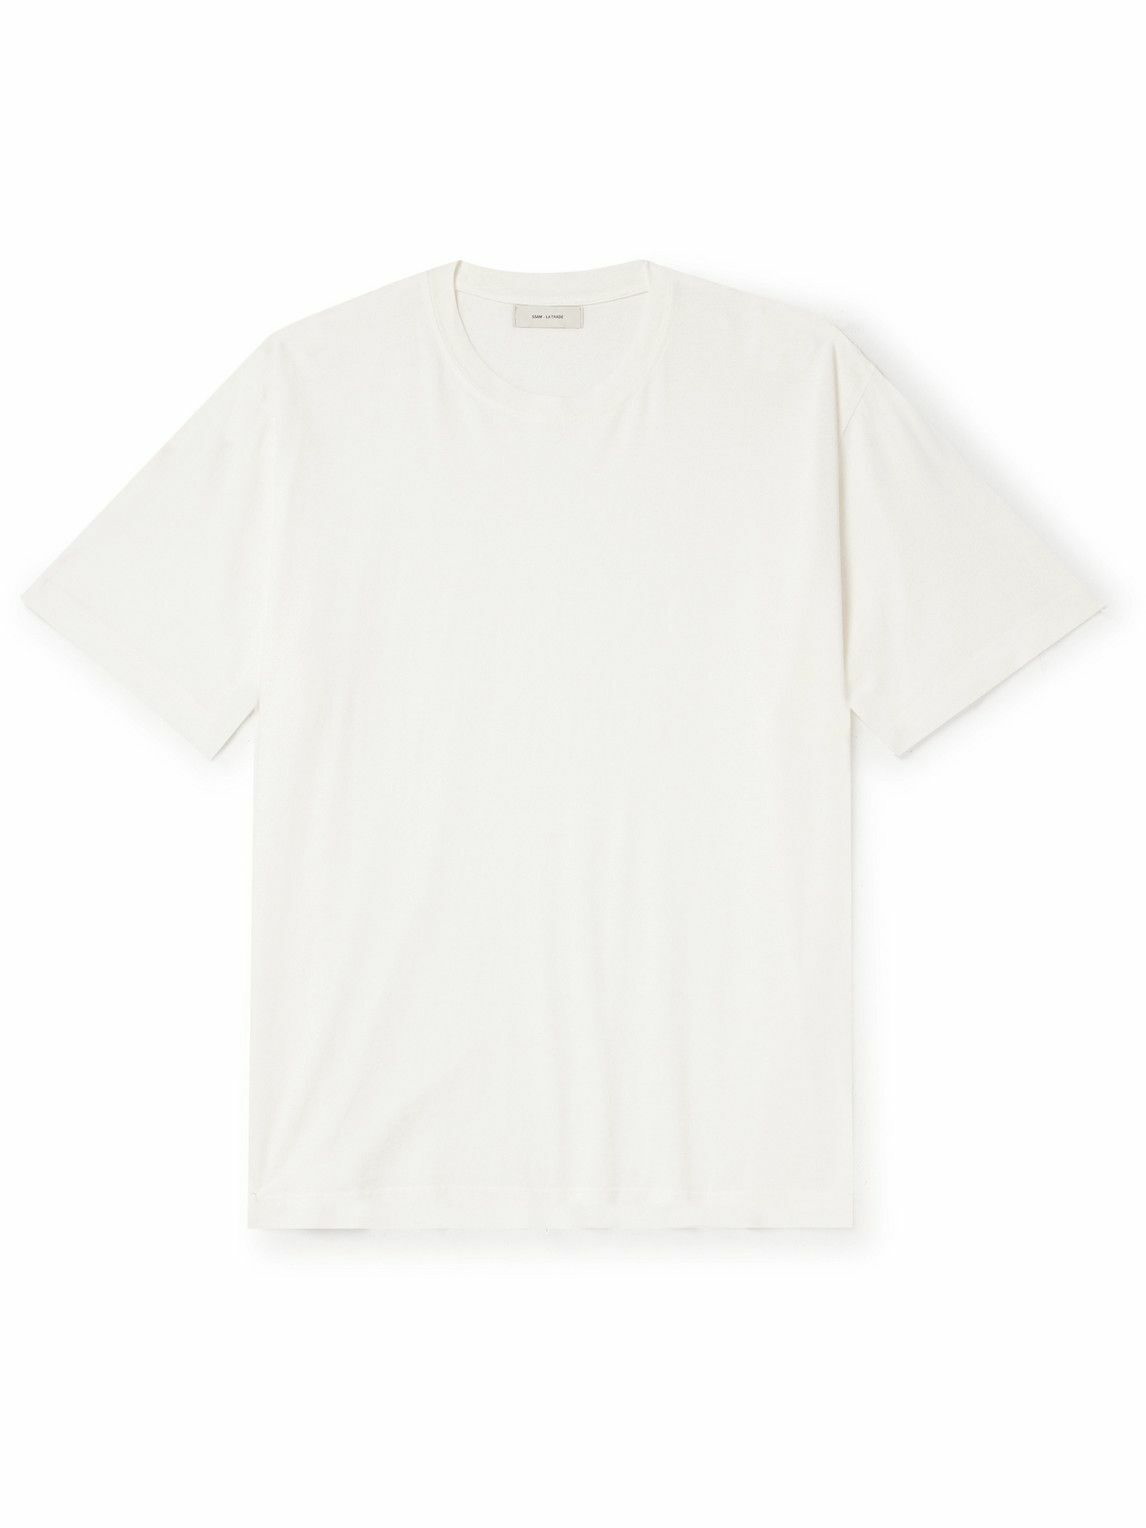 SSAM - Organic Cotton-Jersey T-Shirt - White SSAM